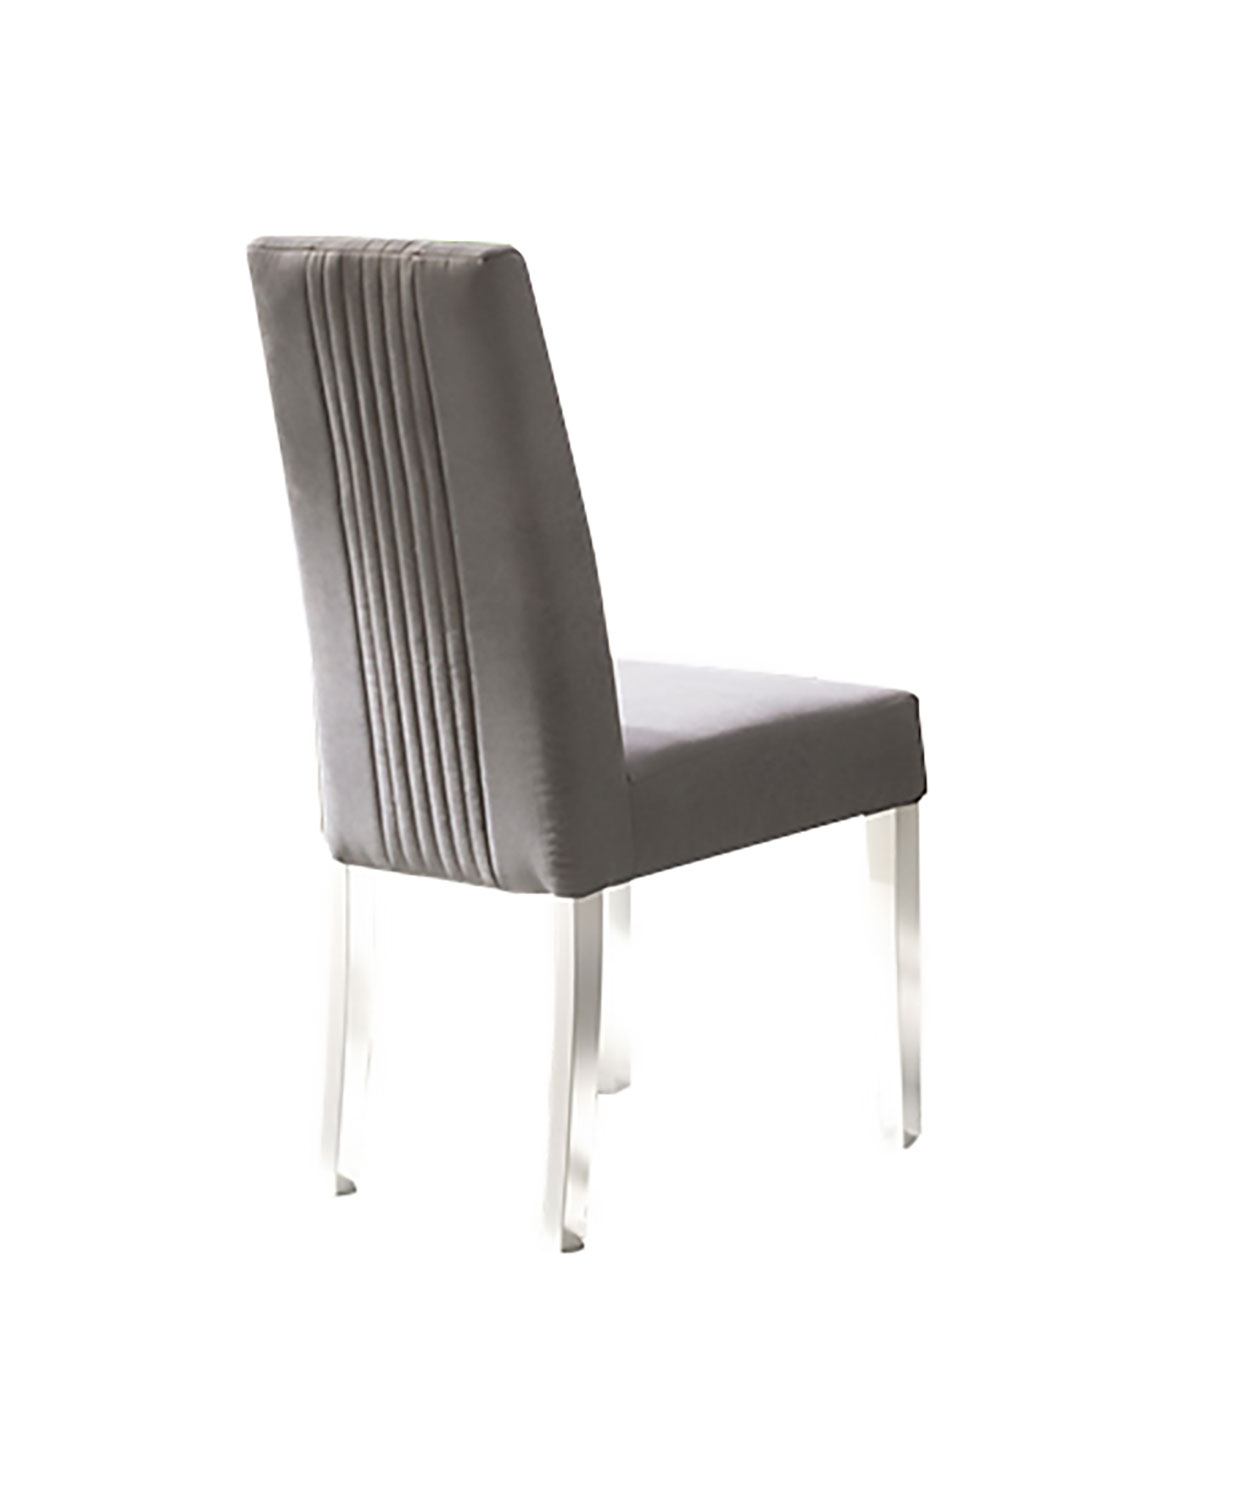 Mara Dining Chair - Grey